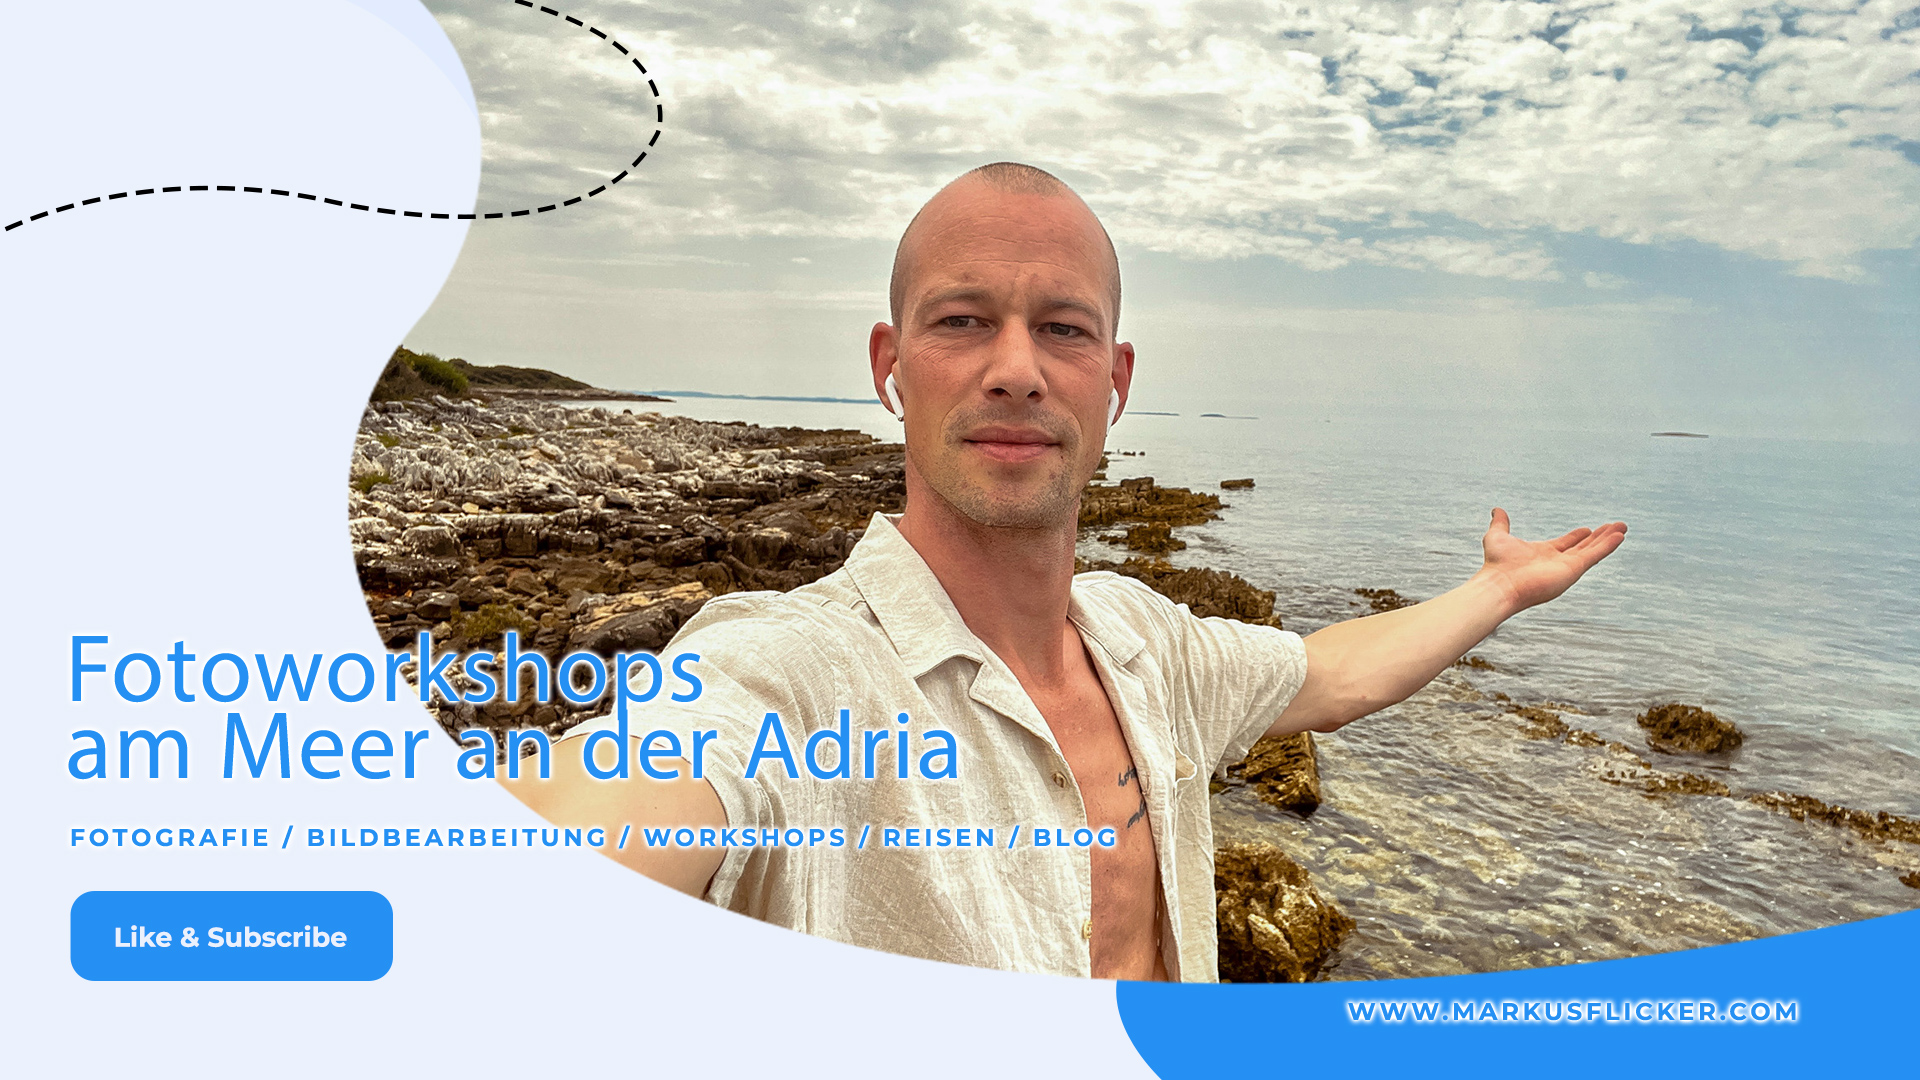 Fotoworkshops am Meer an der Adria